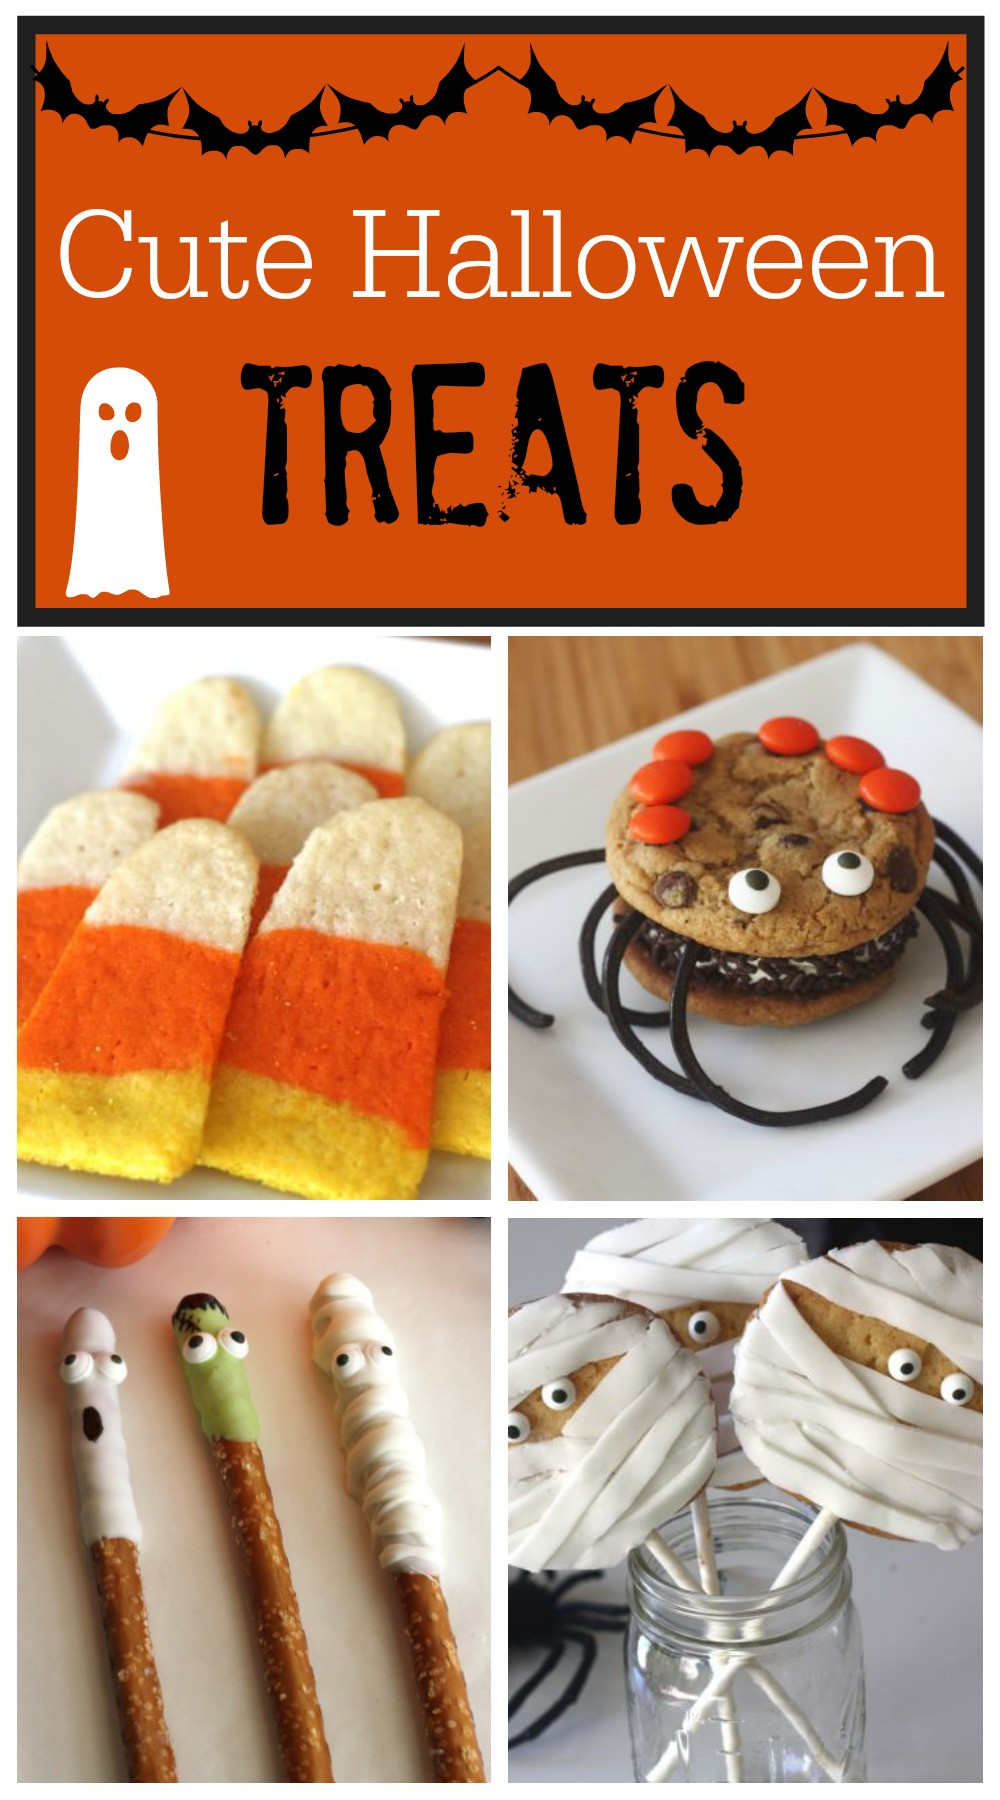 Cutest Halloween Desserts
 Cute Halloween Treats